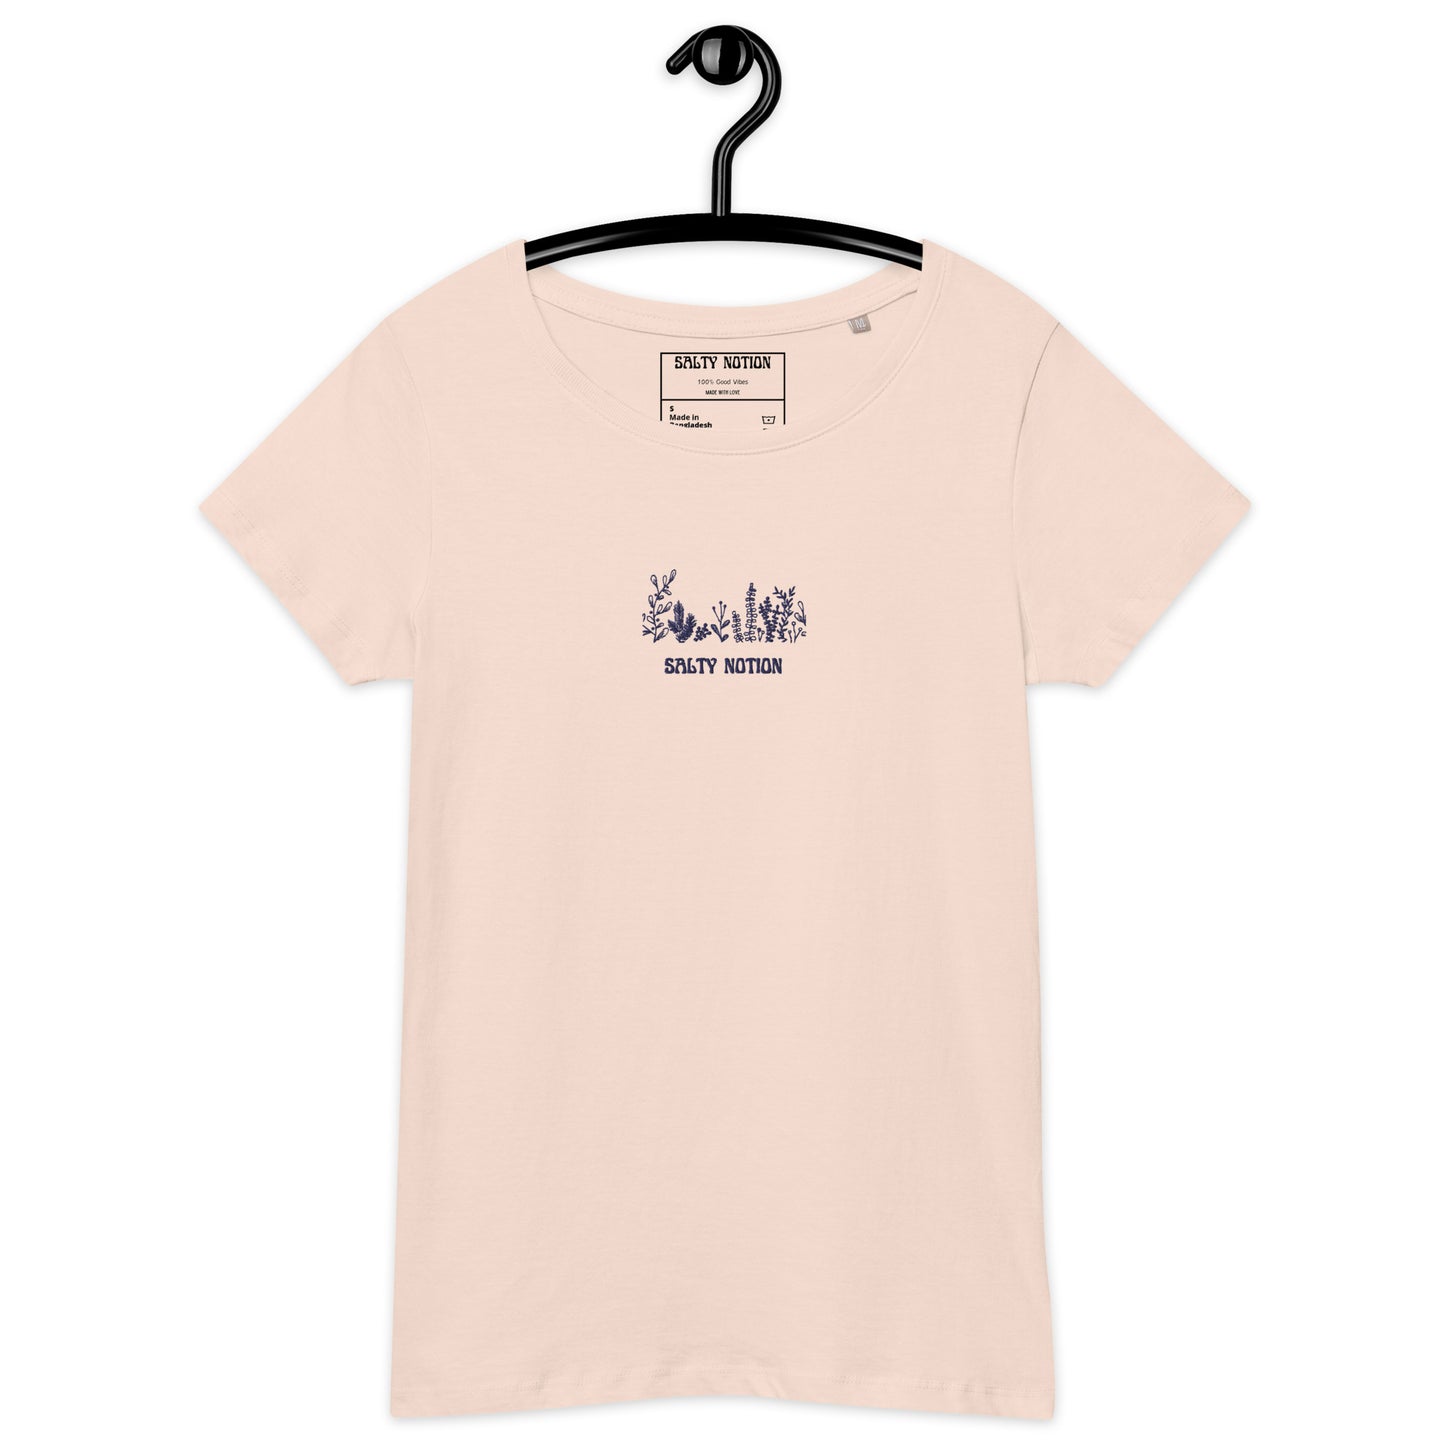 Marine Foliage Soft Basic Organic Embroidery T-Shirt White/Creamy Pink/Sand